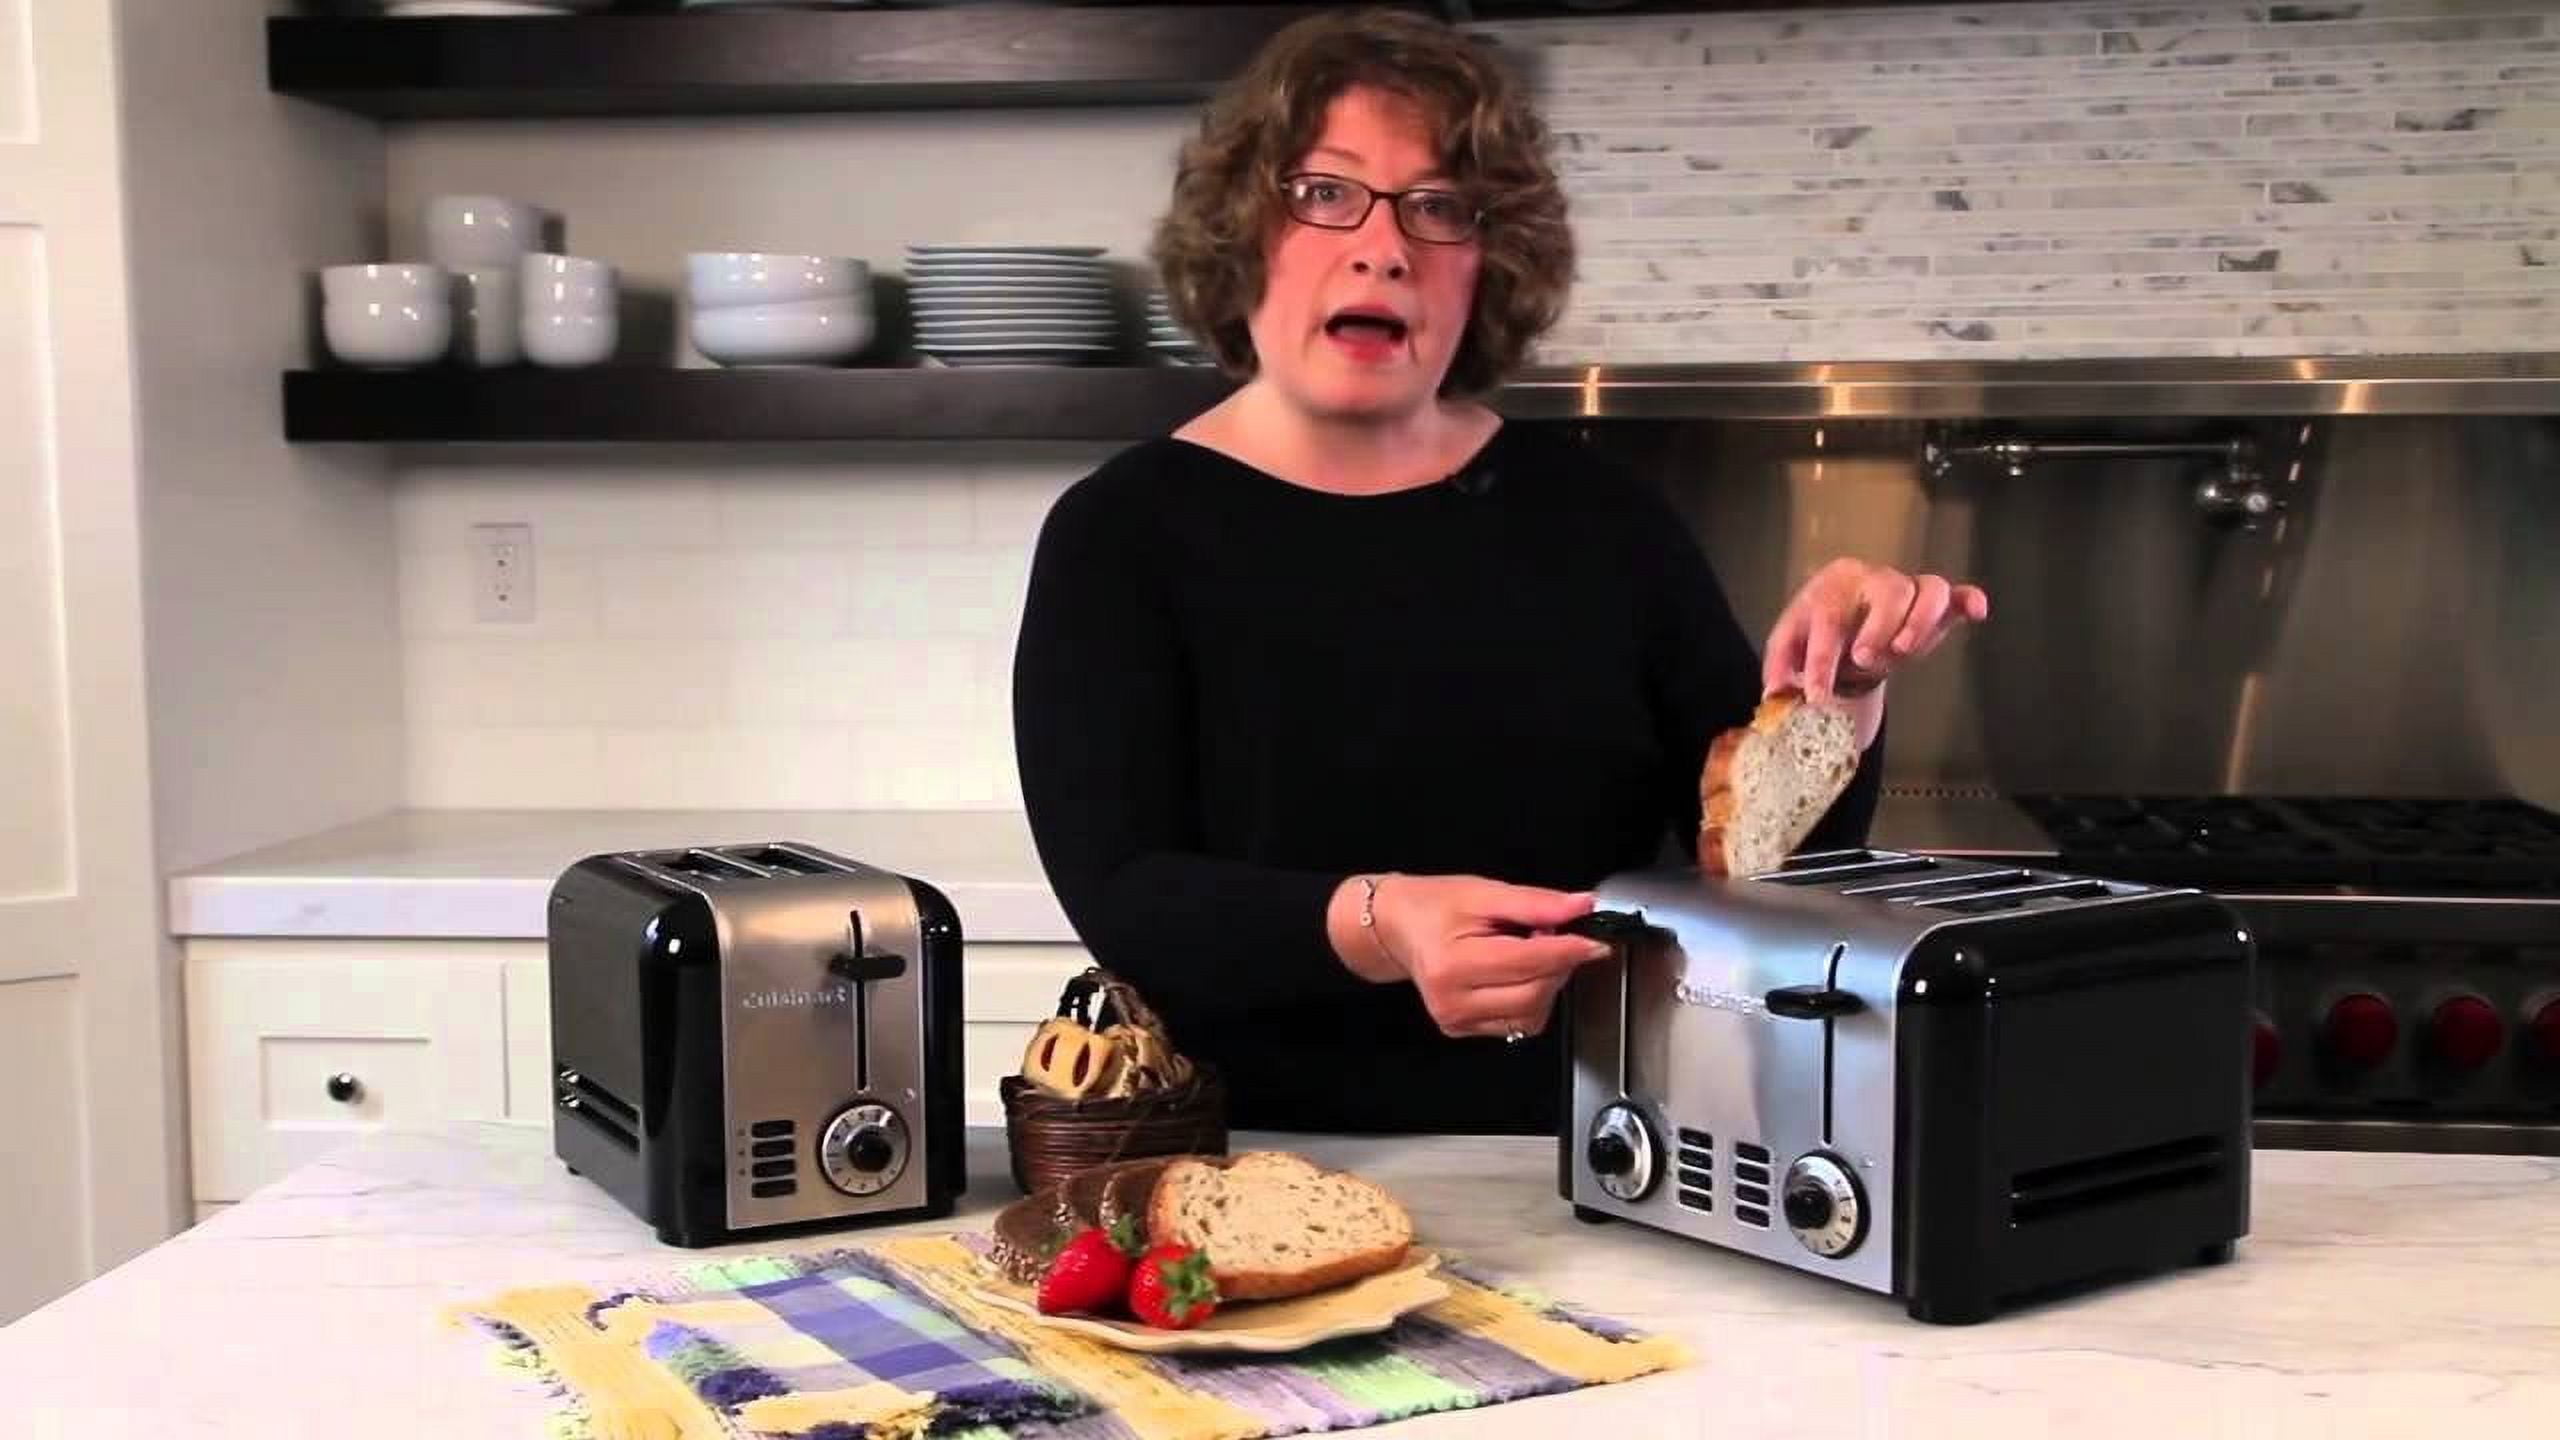 Cuisinart 4 Slice Compact Plastic Toaster 